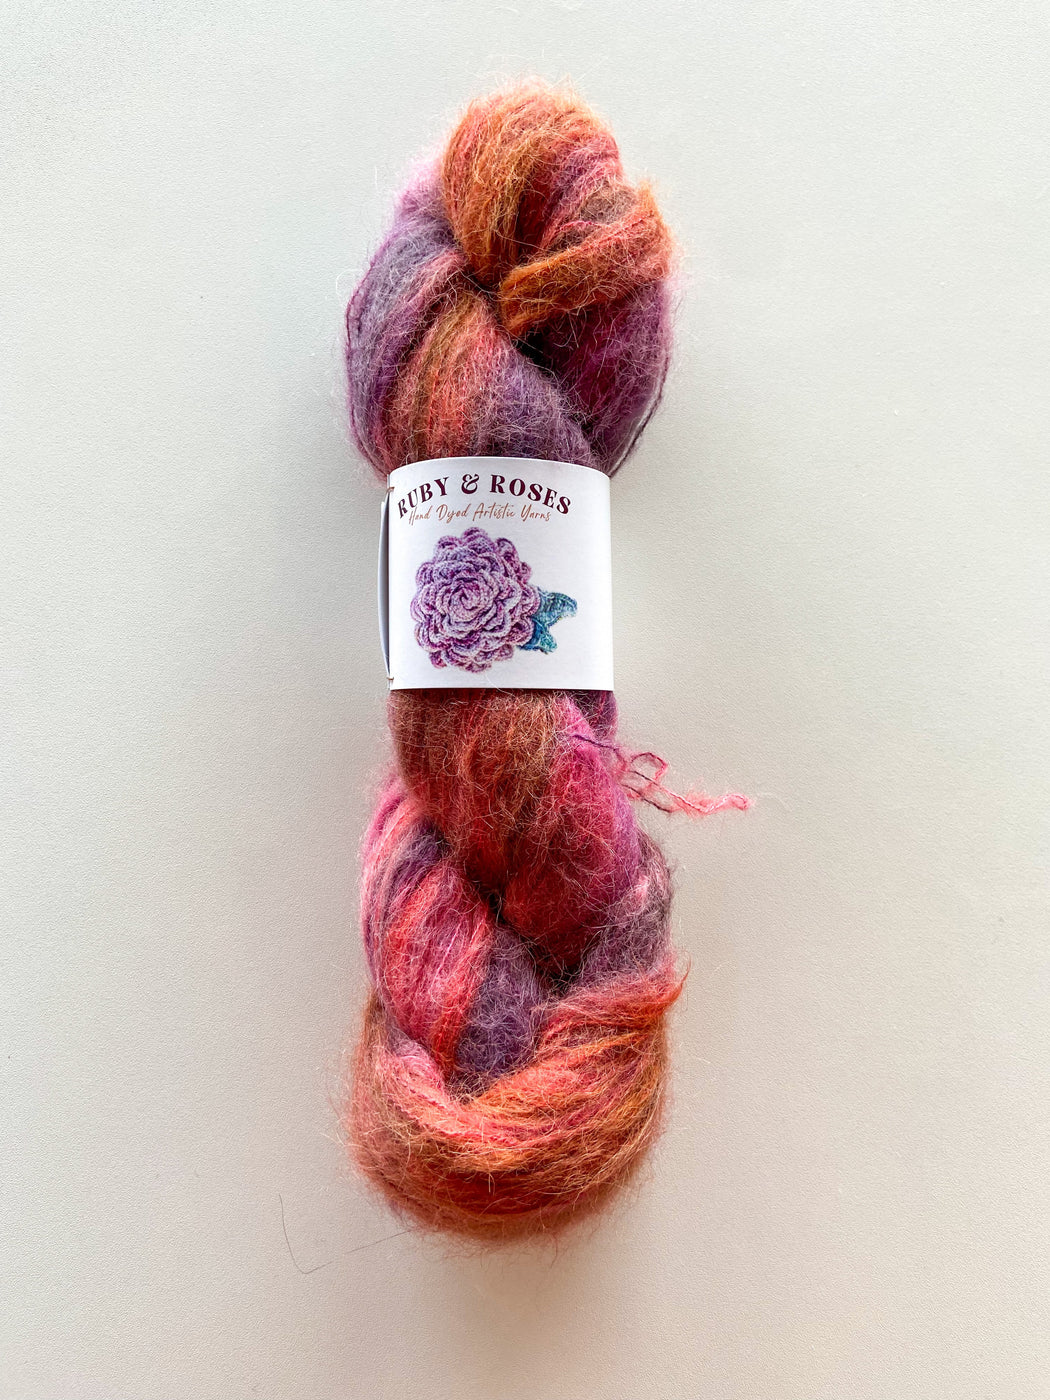 Misfit - OOAK - Suri - Ruby and Roses Yarn - Hand Dyed Yarn